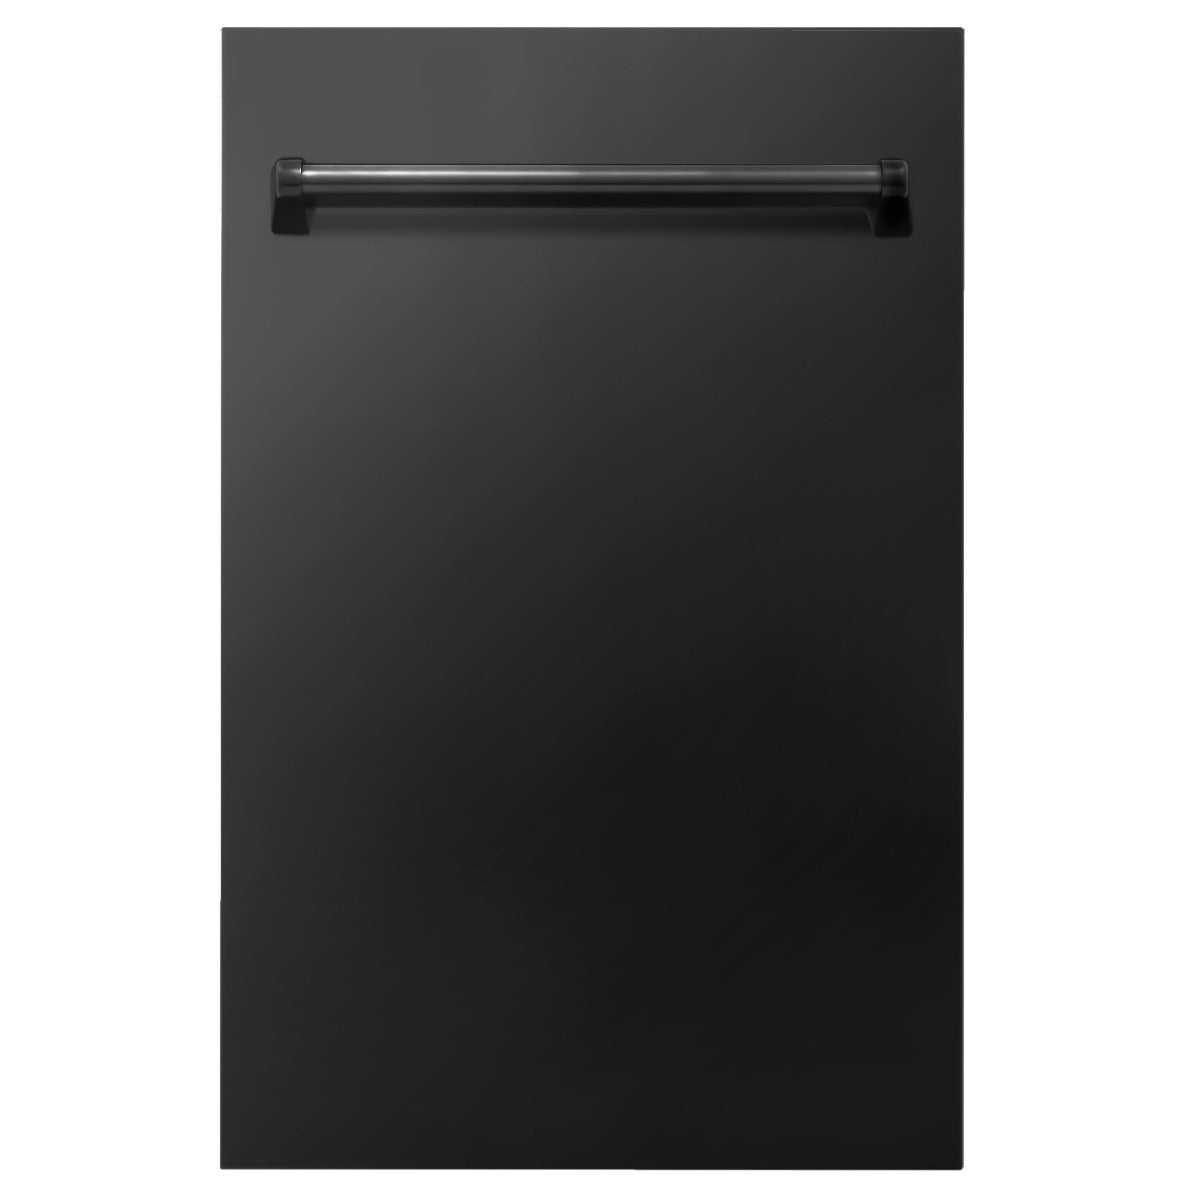 ZLINE 18 in. Top Control Dishwasher in Black Stainless Steel